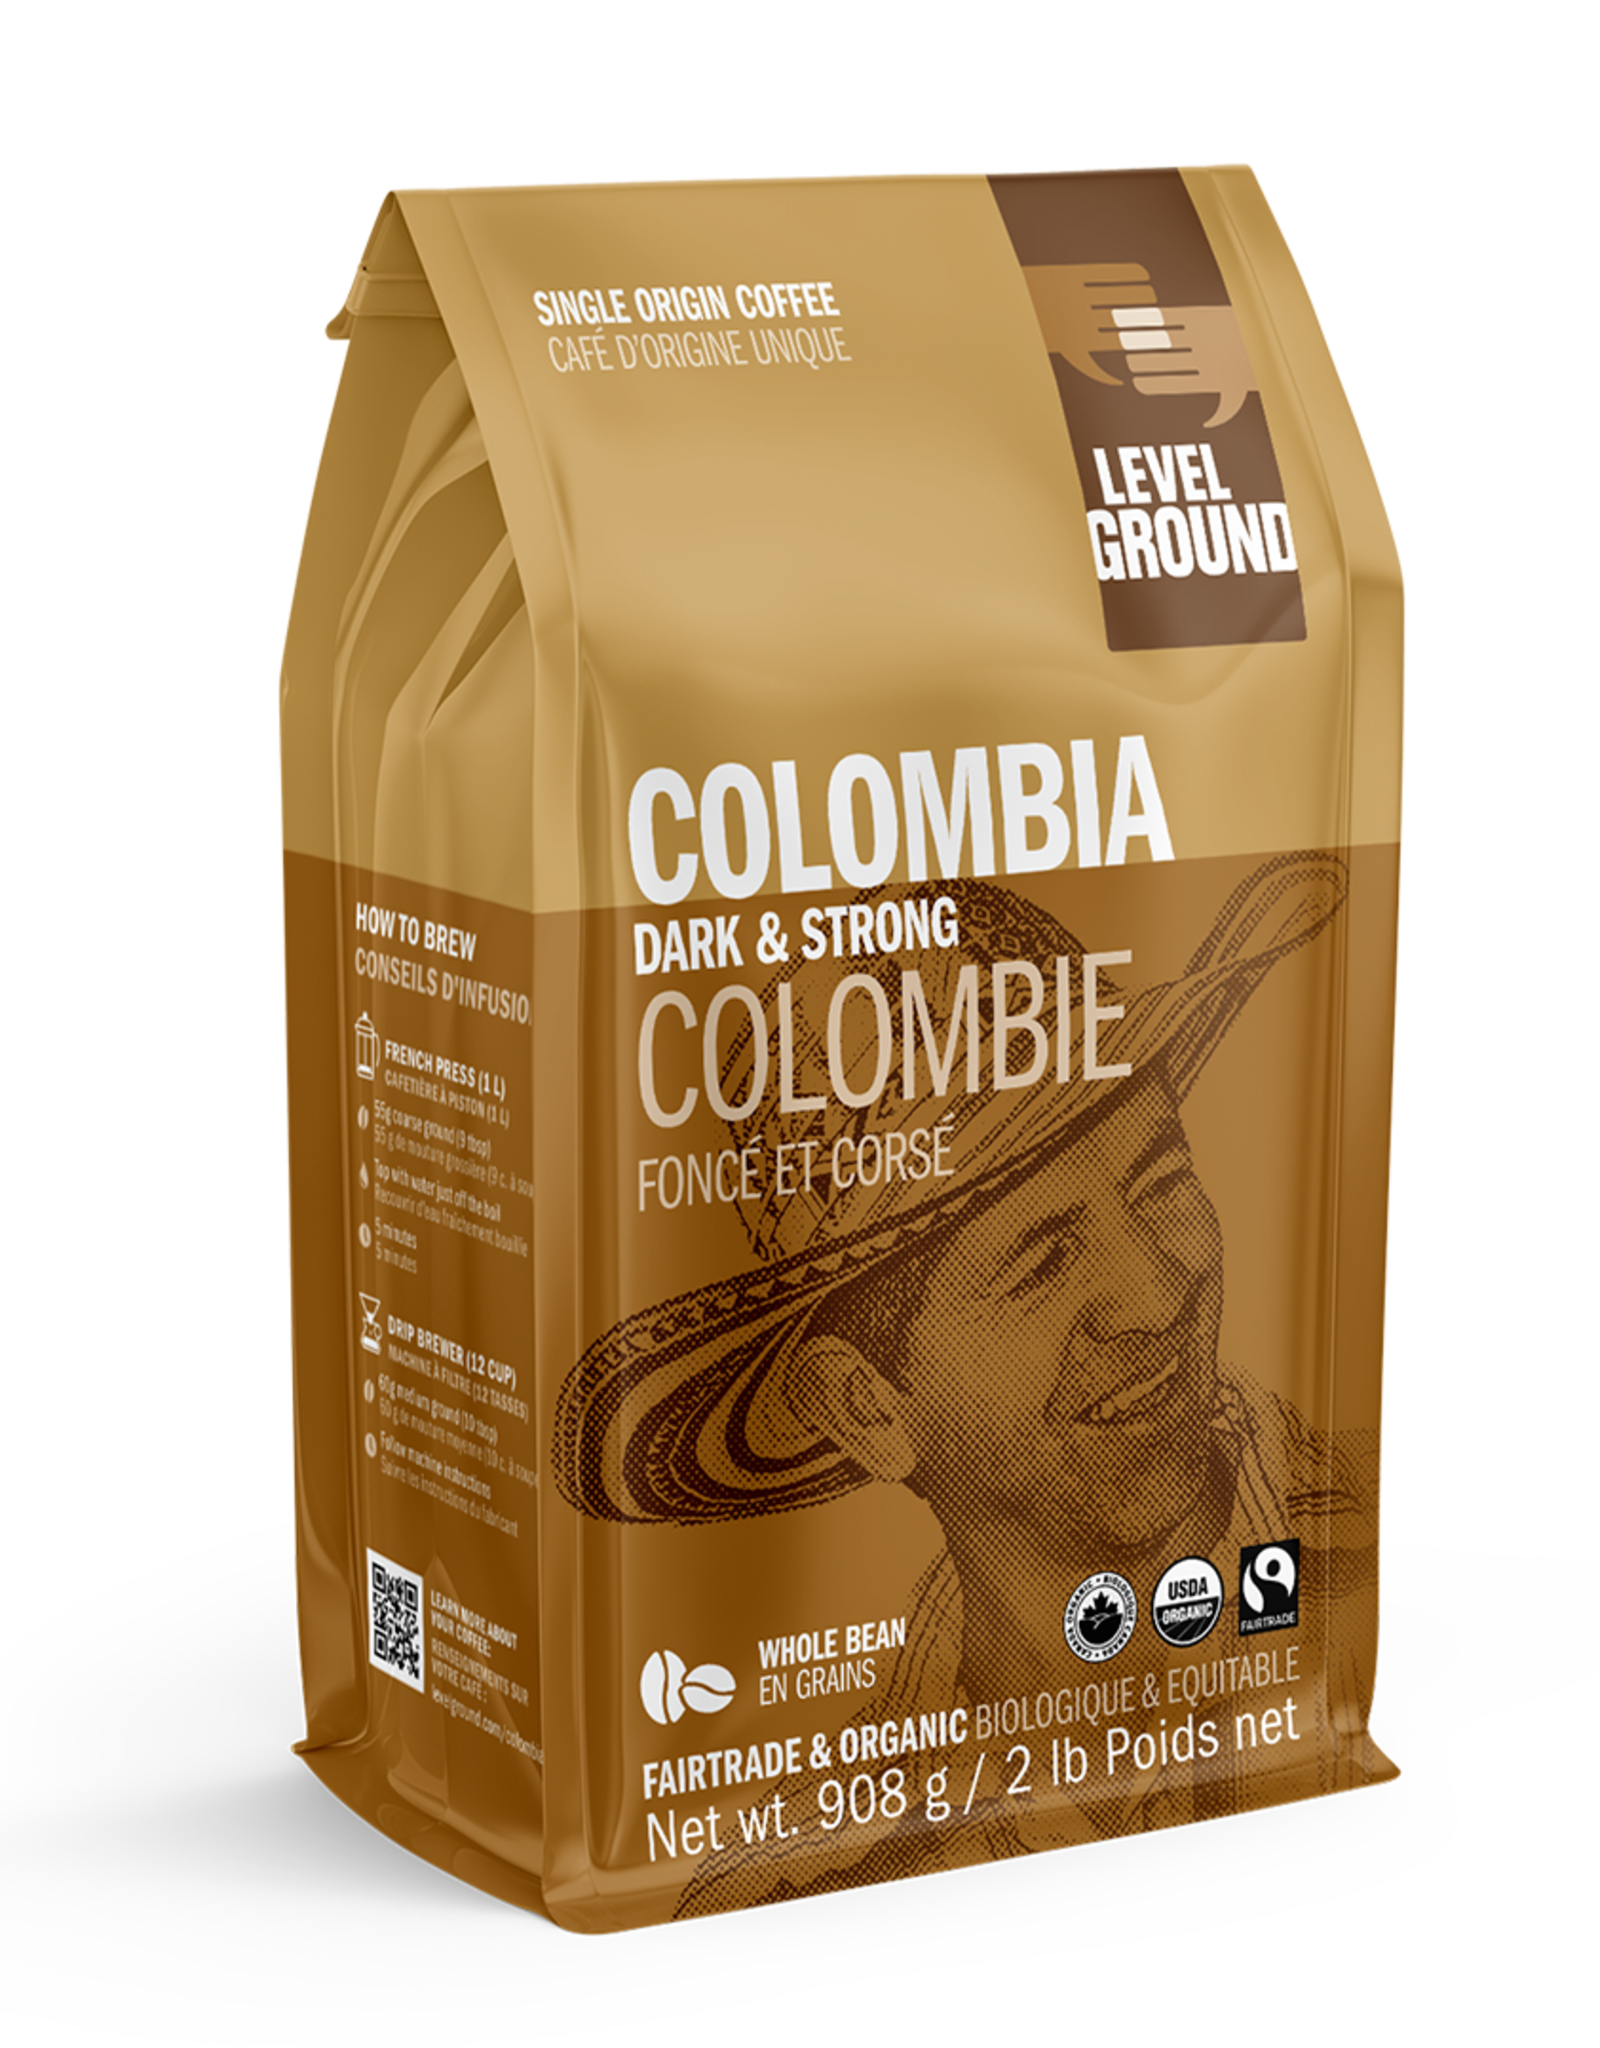 Level Ground Colombia Single Origin Coffee